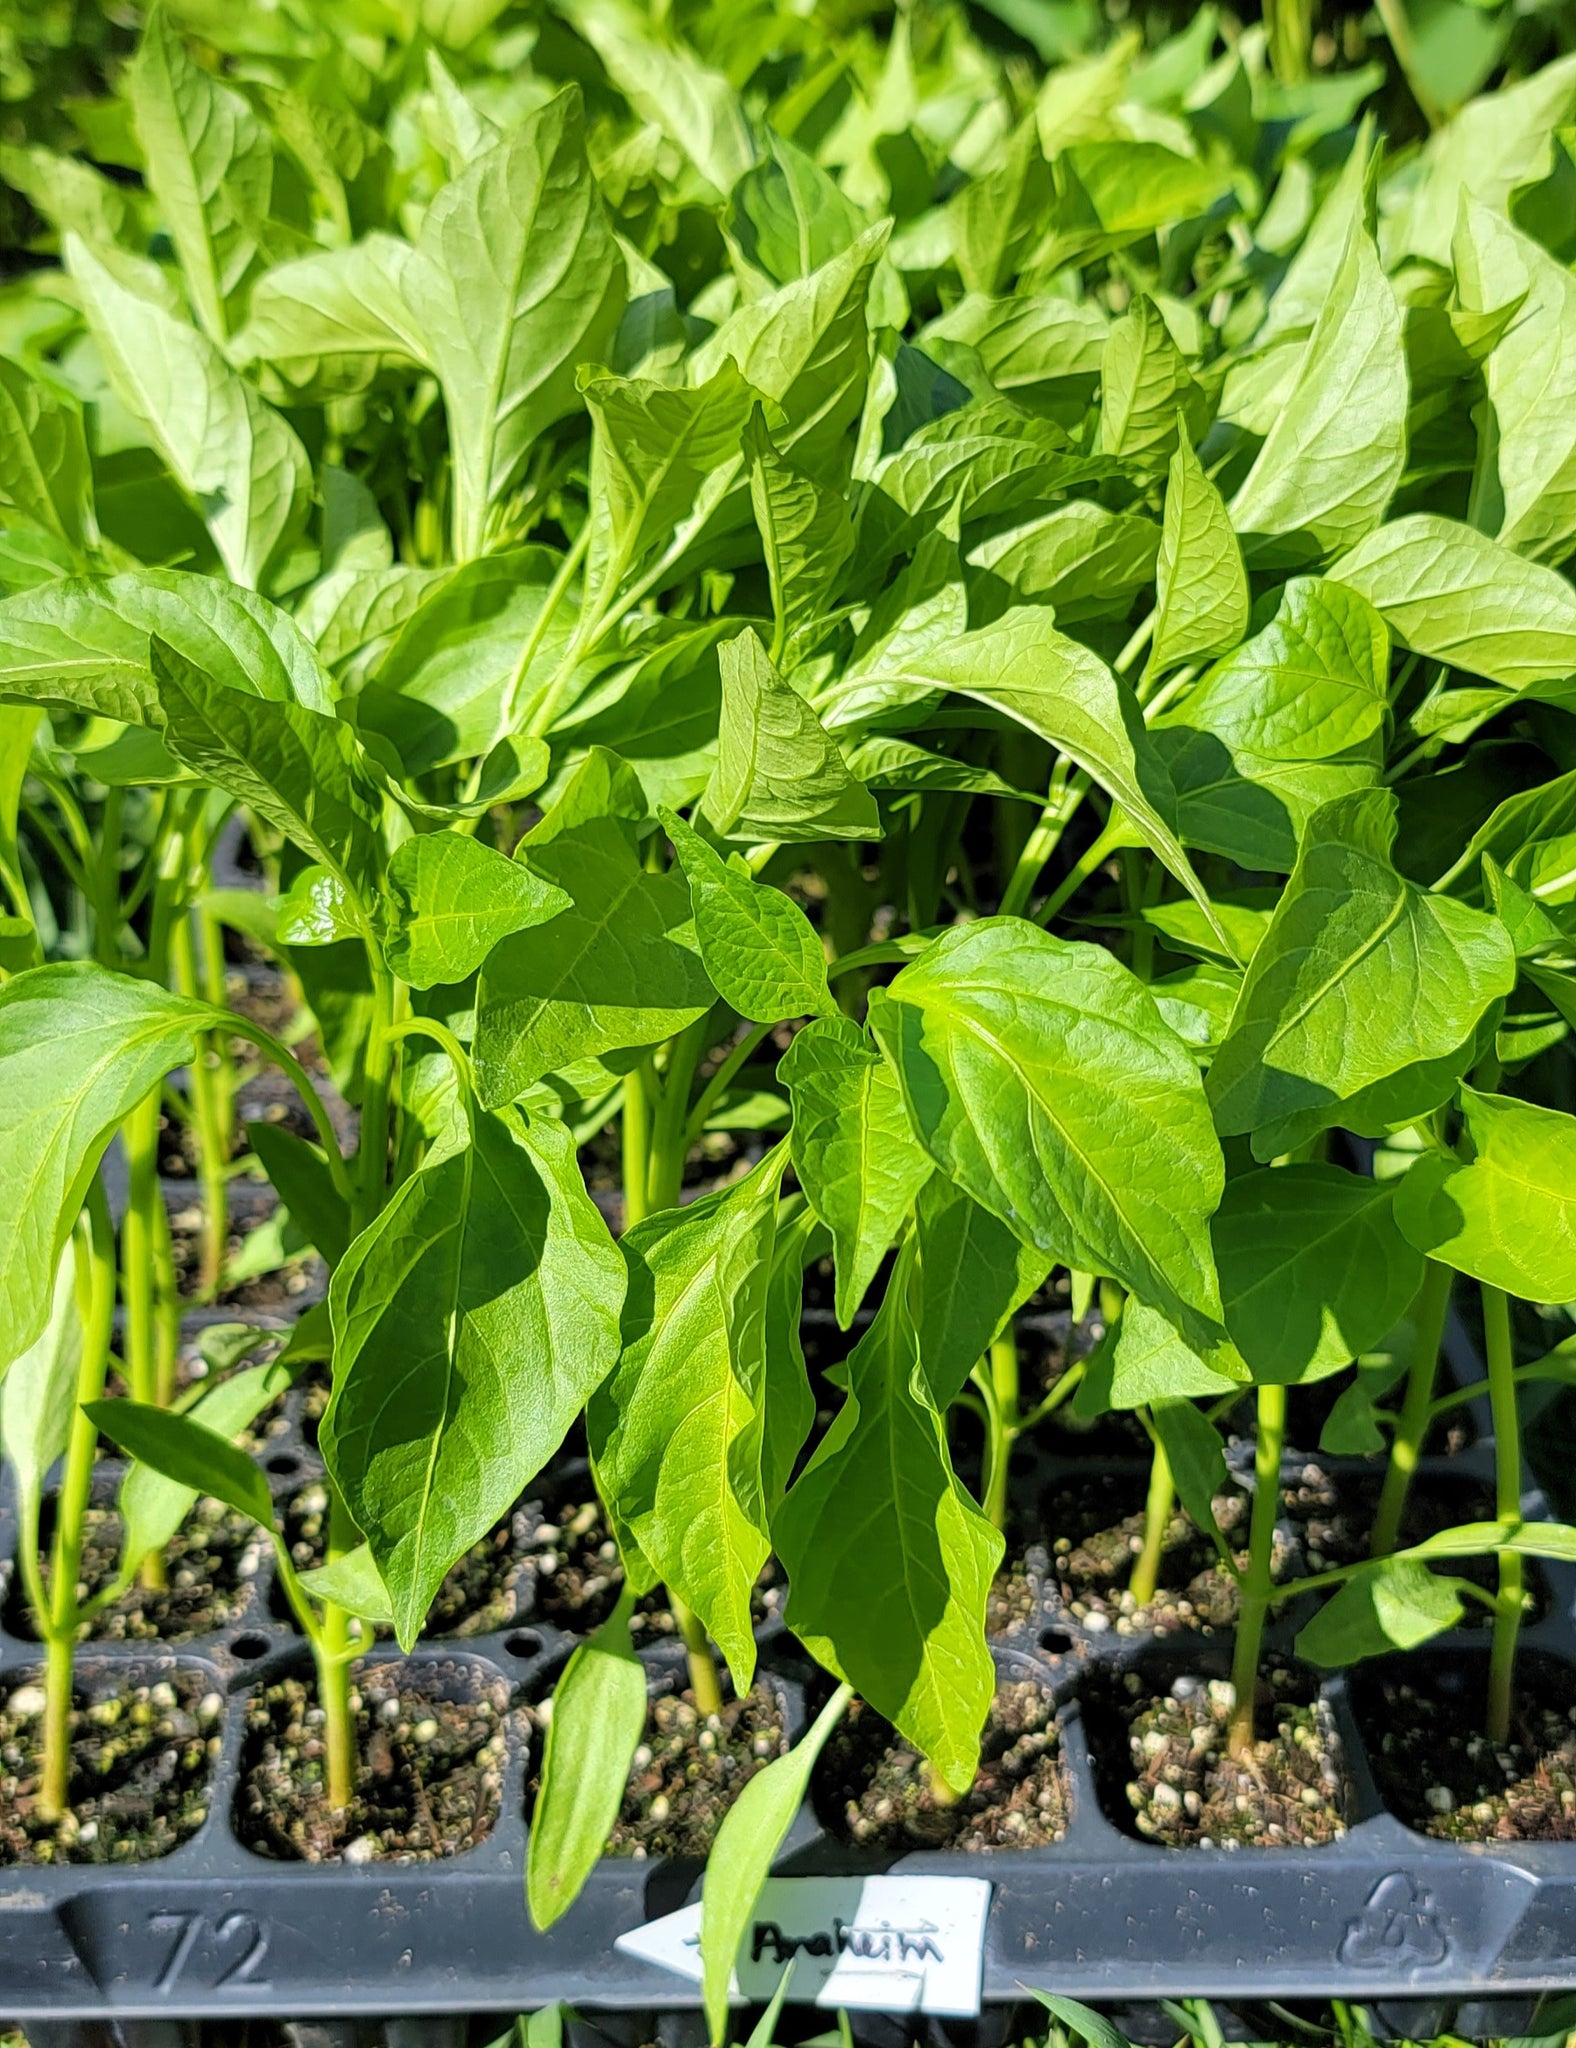 Anaheim Pepper Starter Live Plants - 4 Seedlings